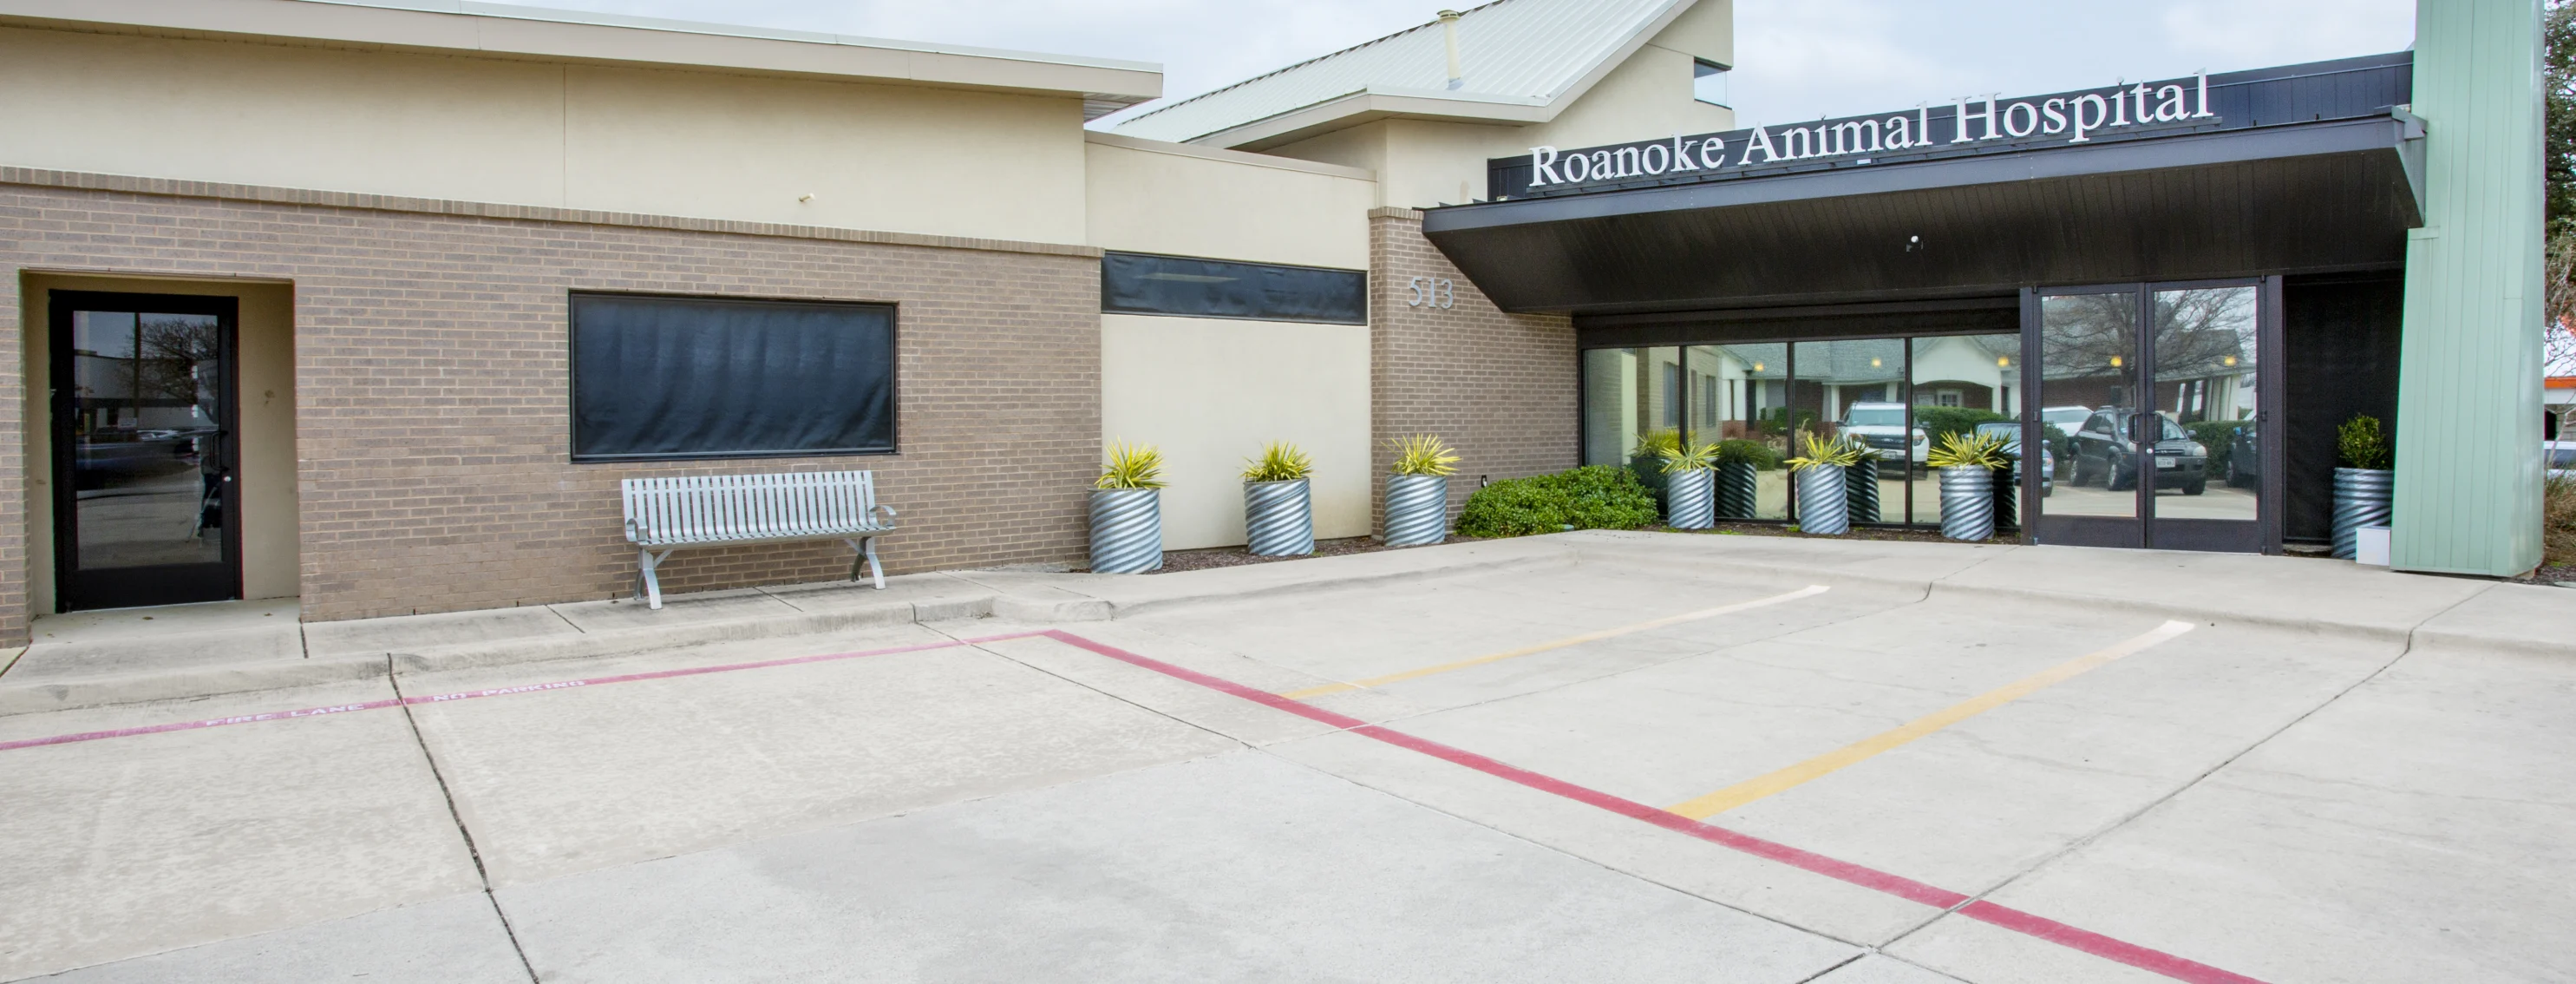 Roanoke Animal Hospital facility entrance